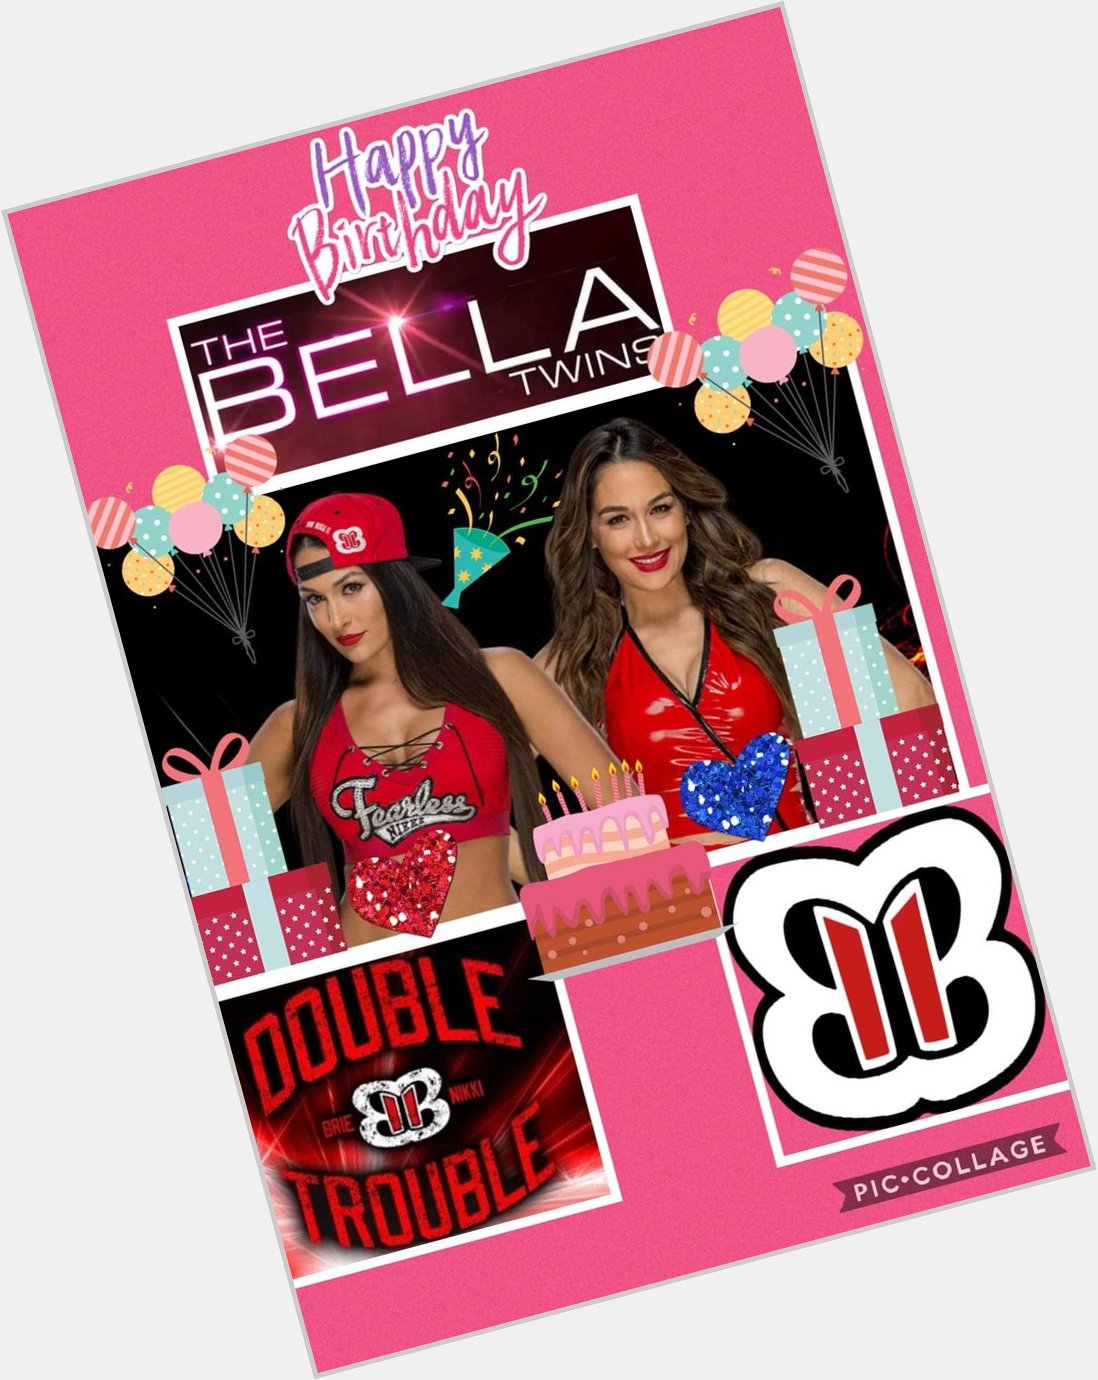 Happy birthday to the bella twins              